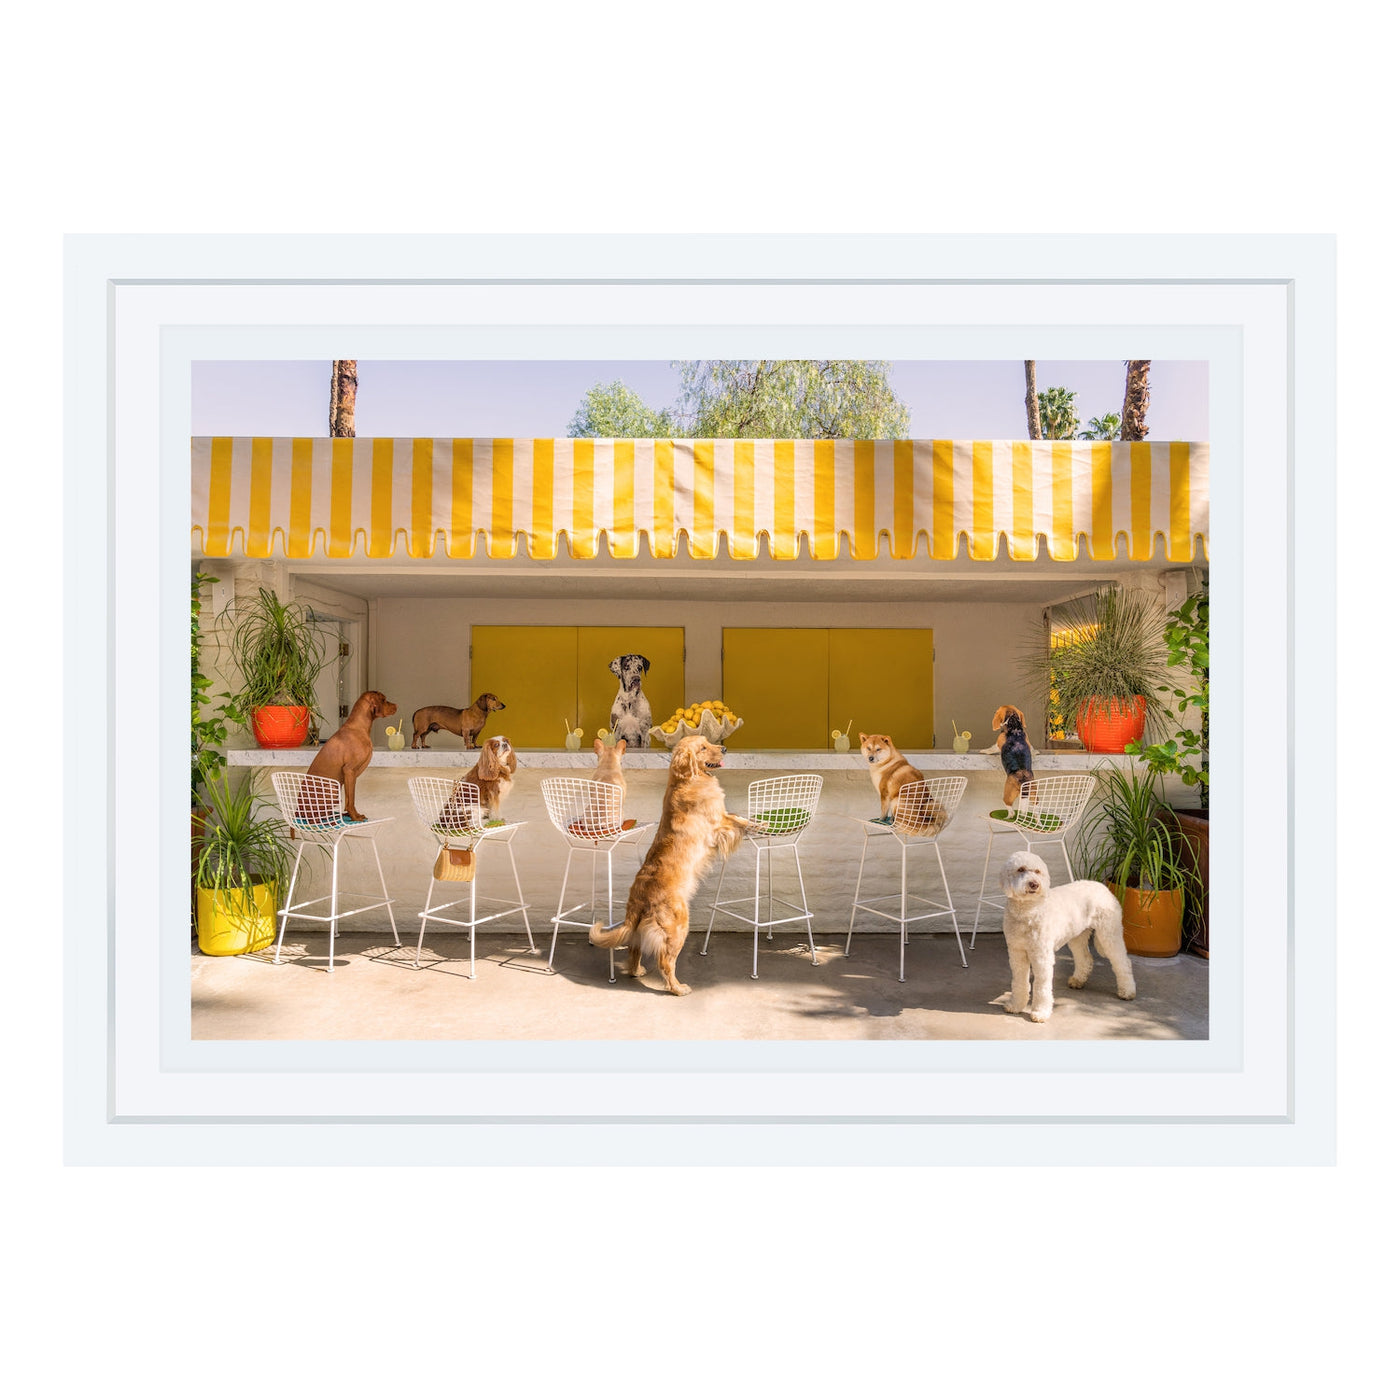 The Lemonade Stand, Parker Palm Springs Mini Print - 10" x 13.5" (Framed)